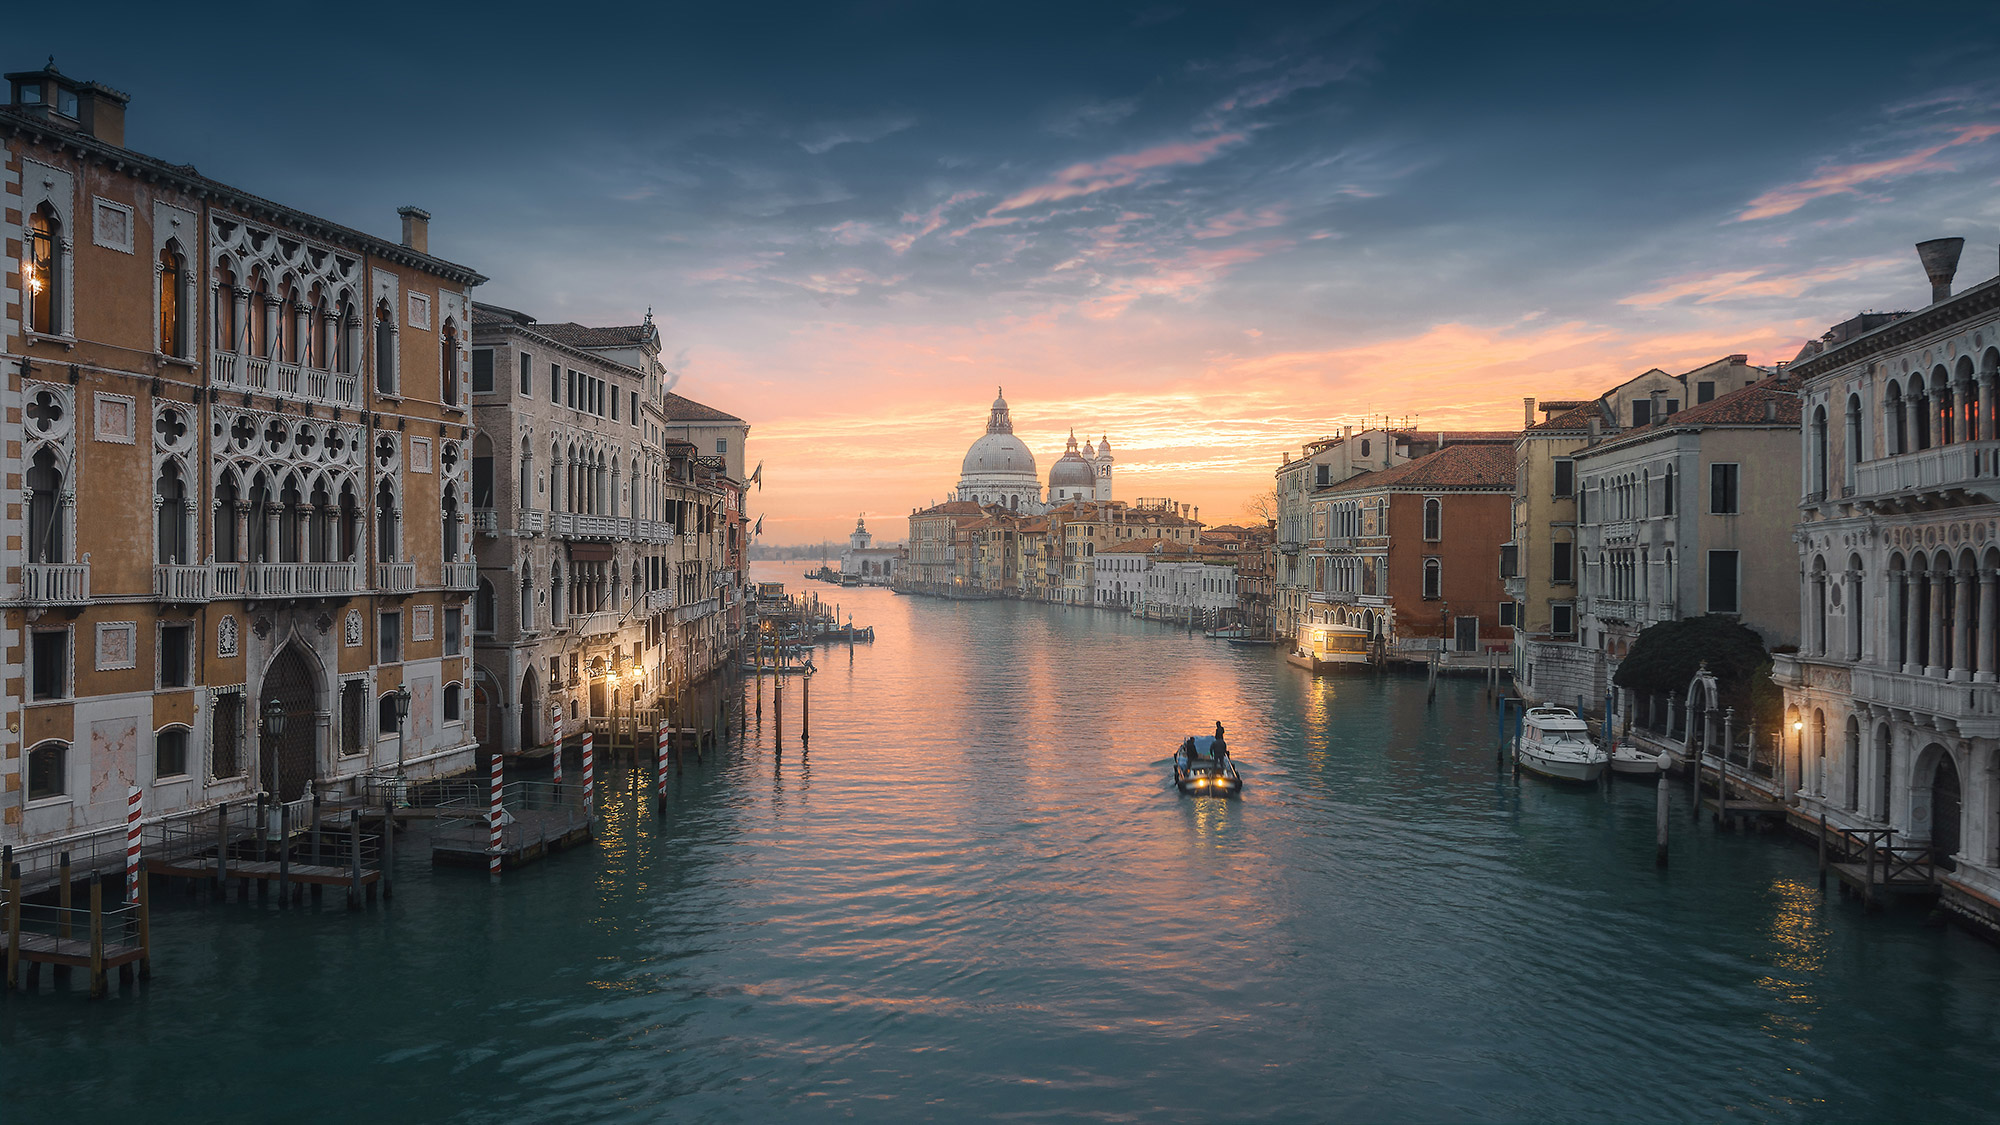 Dream of Venice